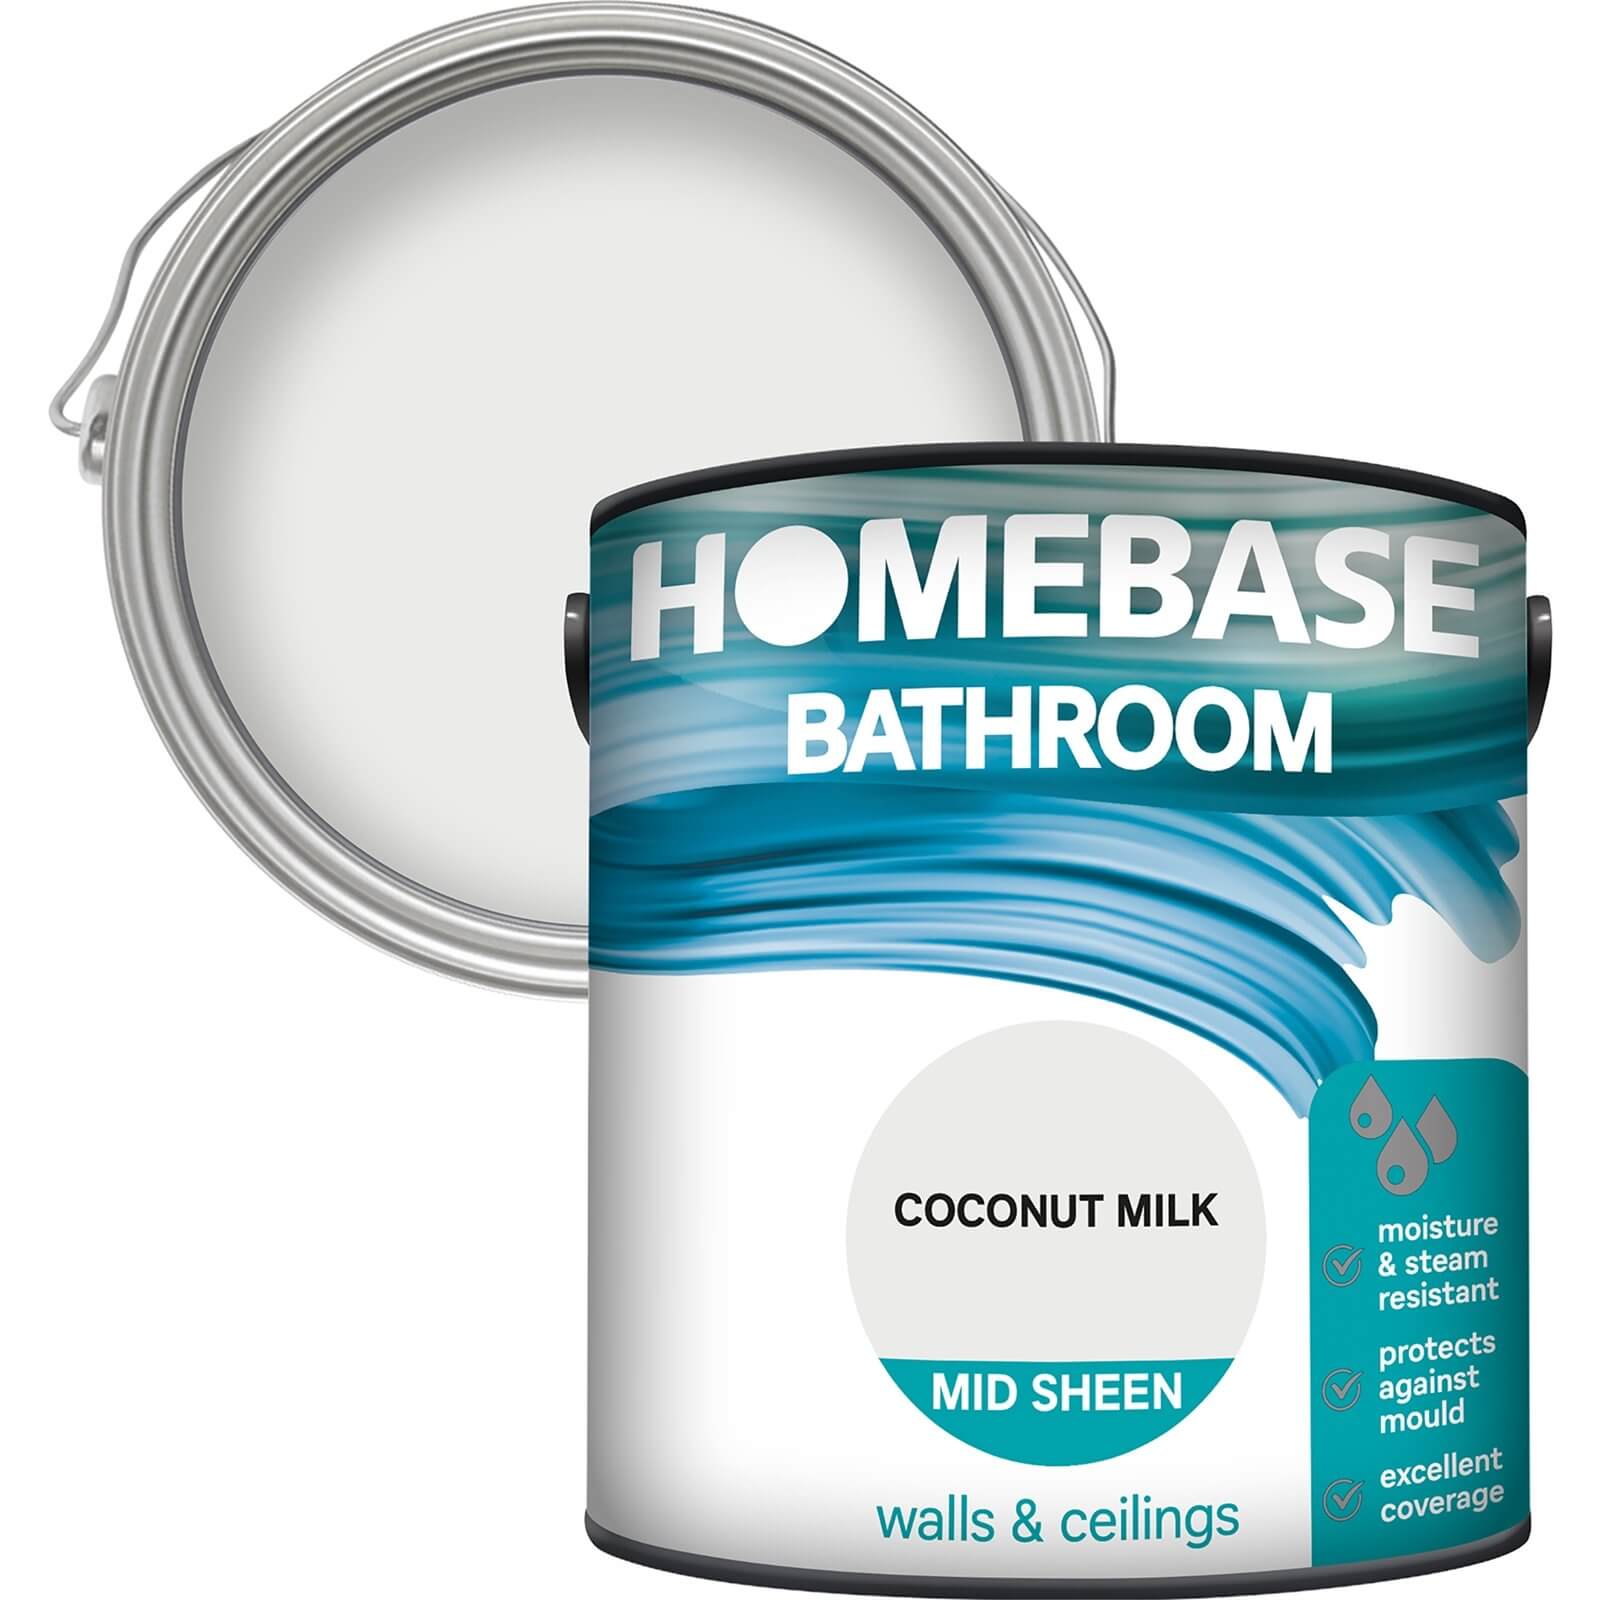 Homebase Bathroom Mid Sheen Paint - Coconut Milk 2.5L